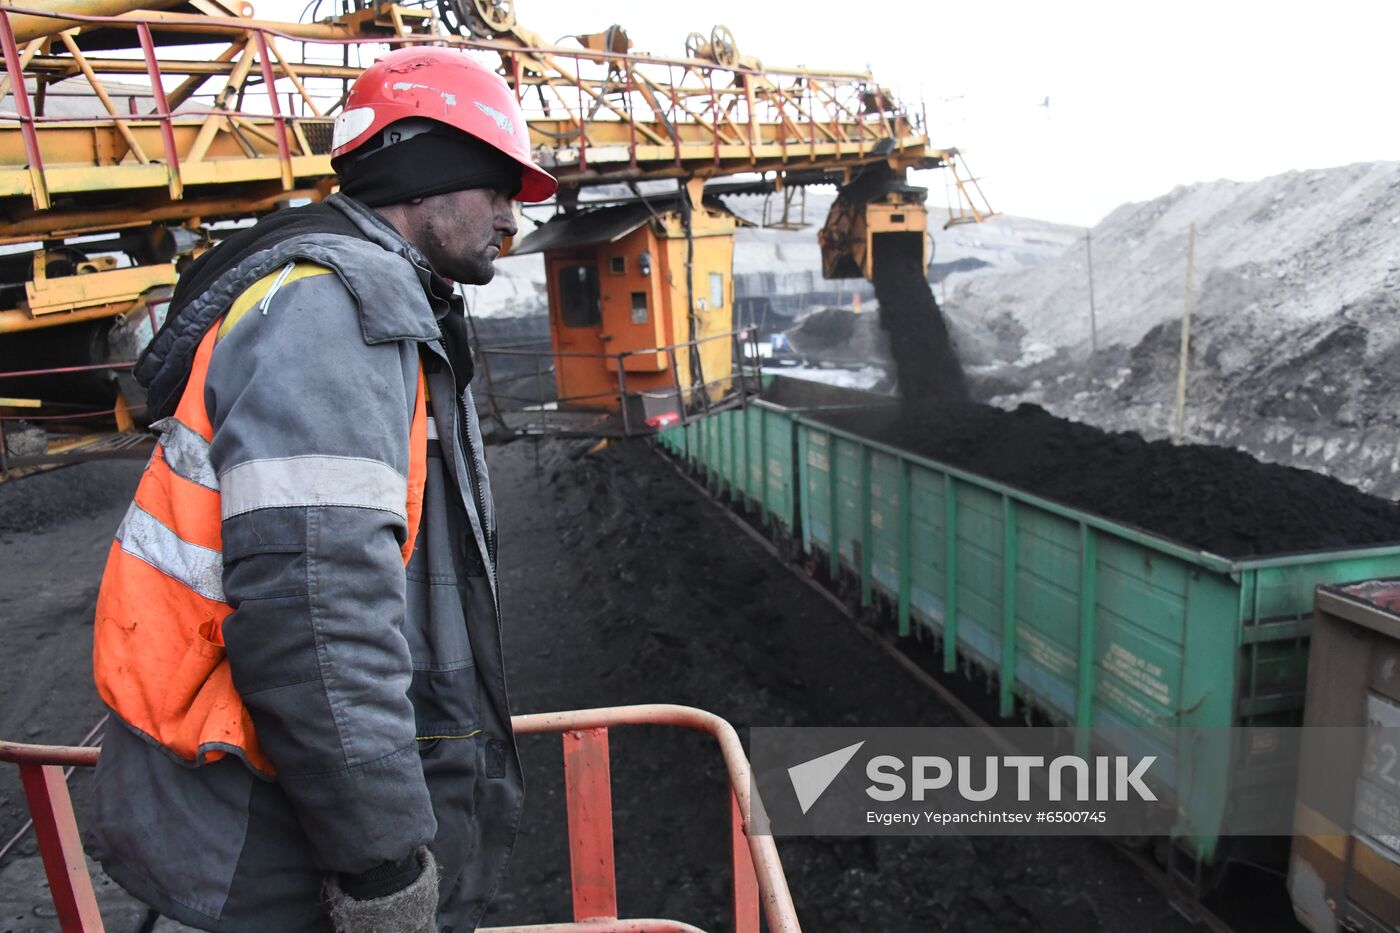 Russia Coal Mining